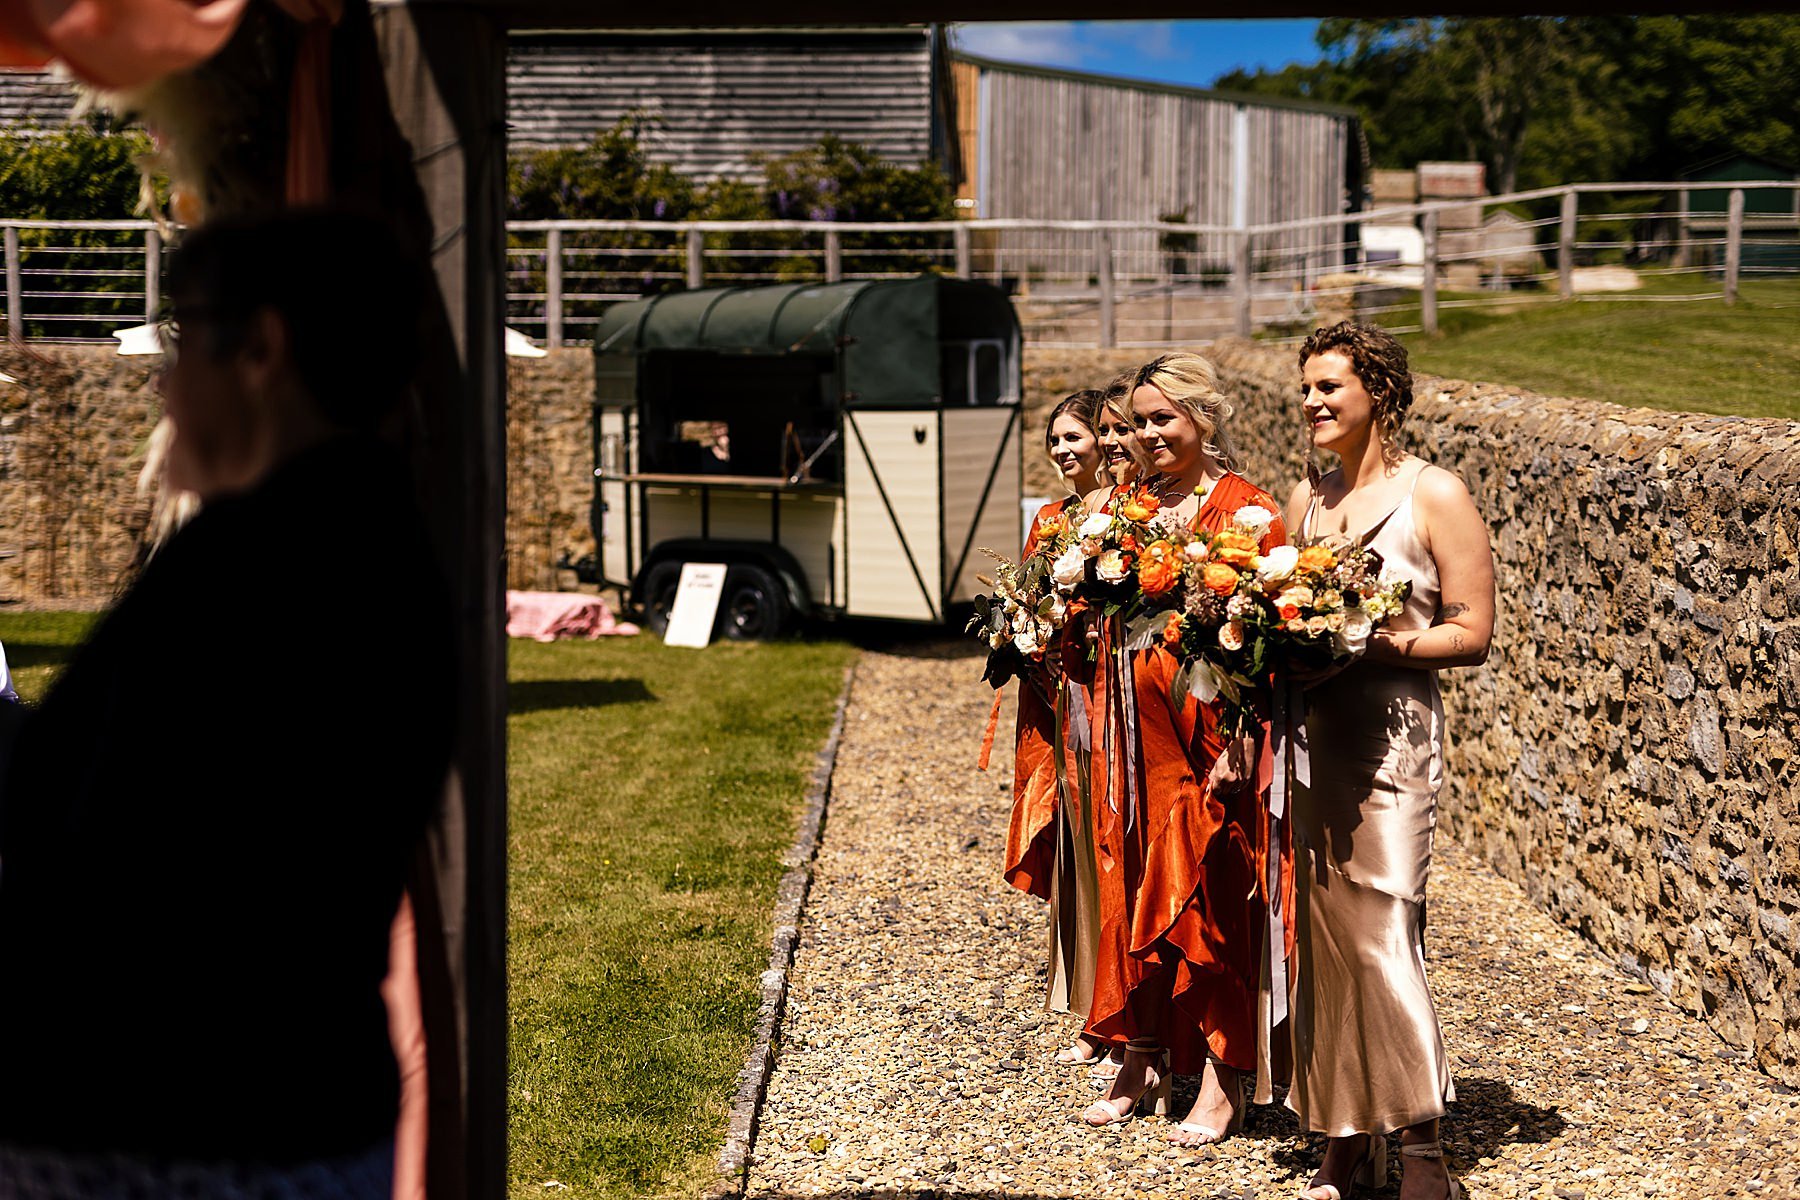 Hope Farm wedding photography with smoke bombs and festival vibe_0029.jpg